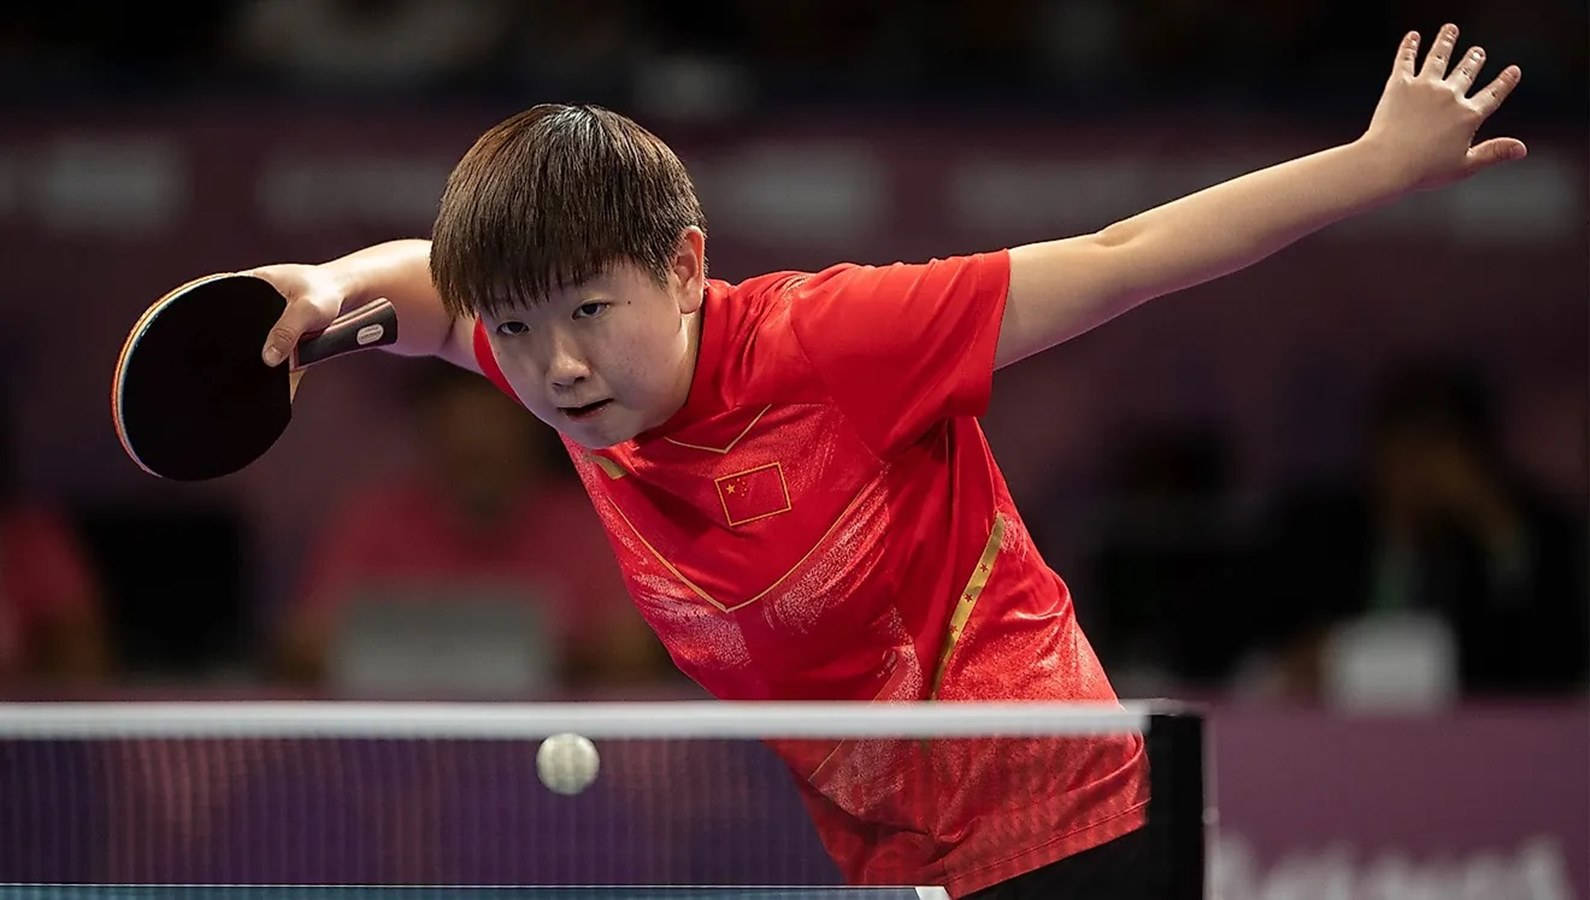 Chinesischertischtennis-olympiasport Wallpaper